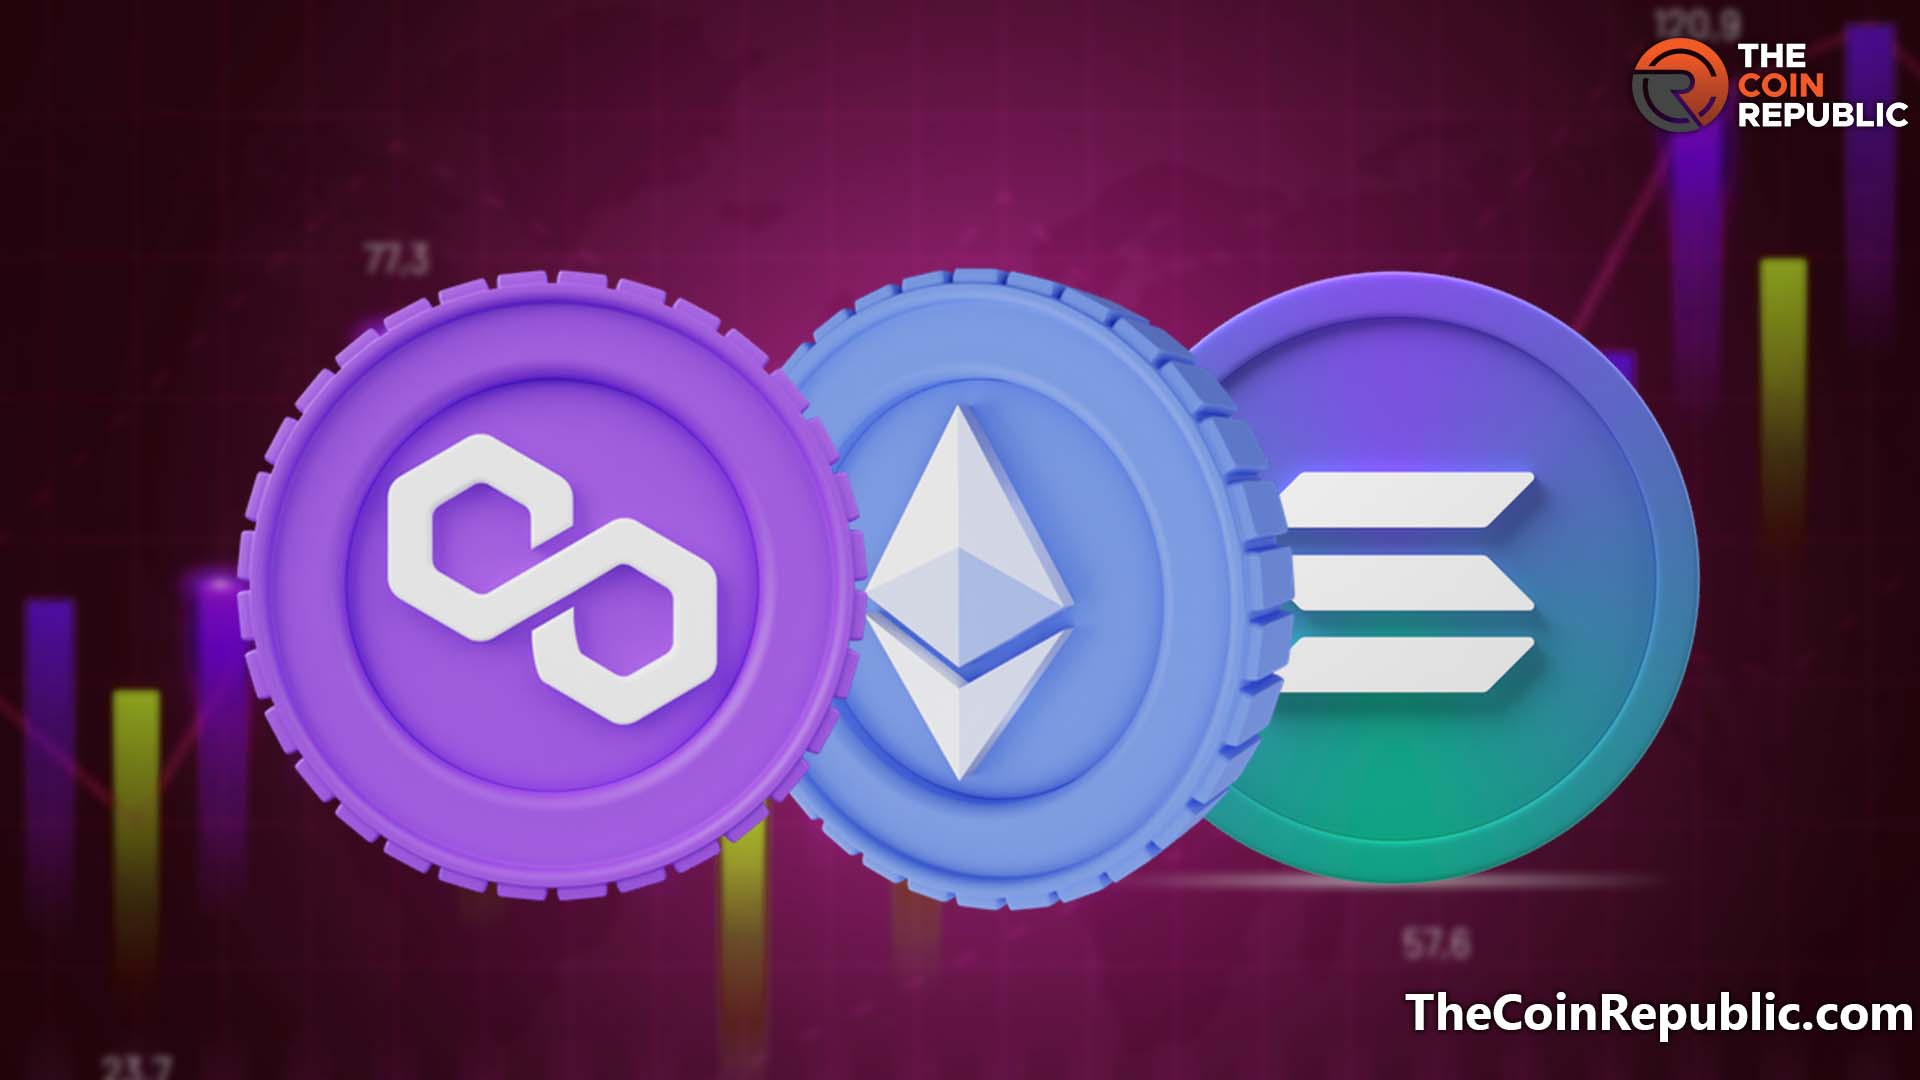 Alcalde caligrafía batalla Trading Bot for Beating Crypto Markets Selects Ethereum, Polygon, Solana,  and Additional Blue-Chip Altcoin. - The Coin Republic